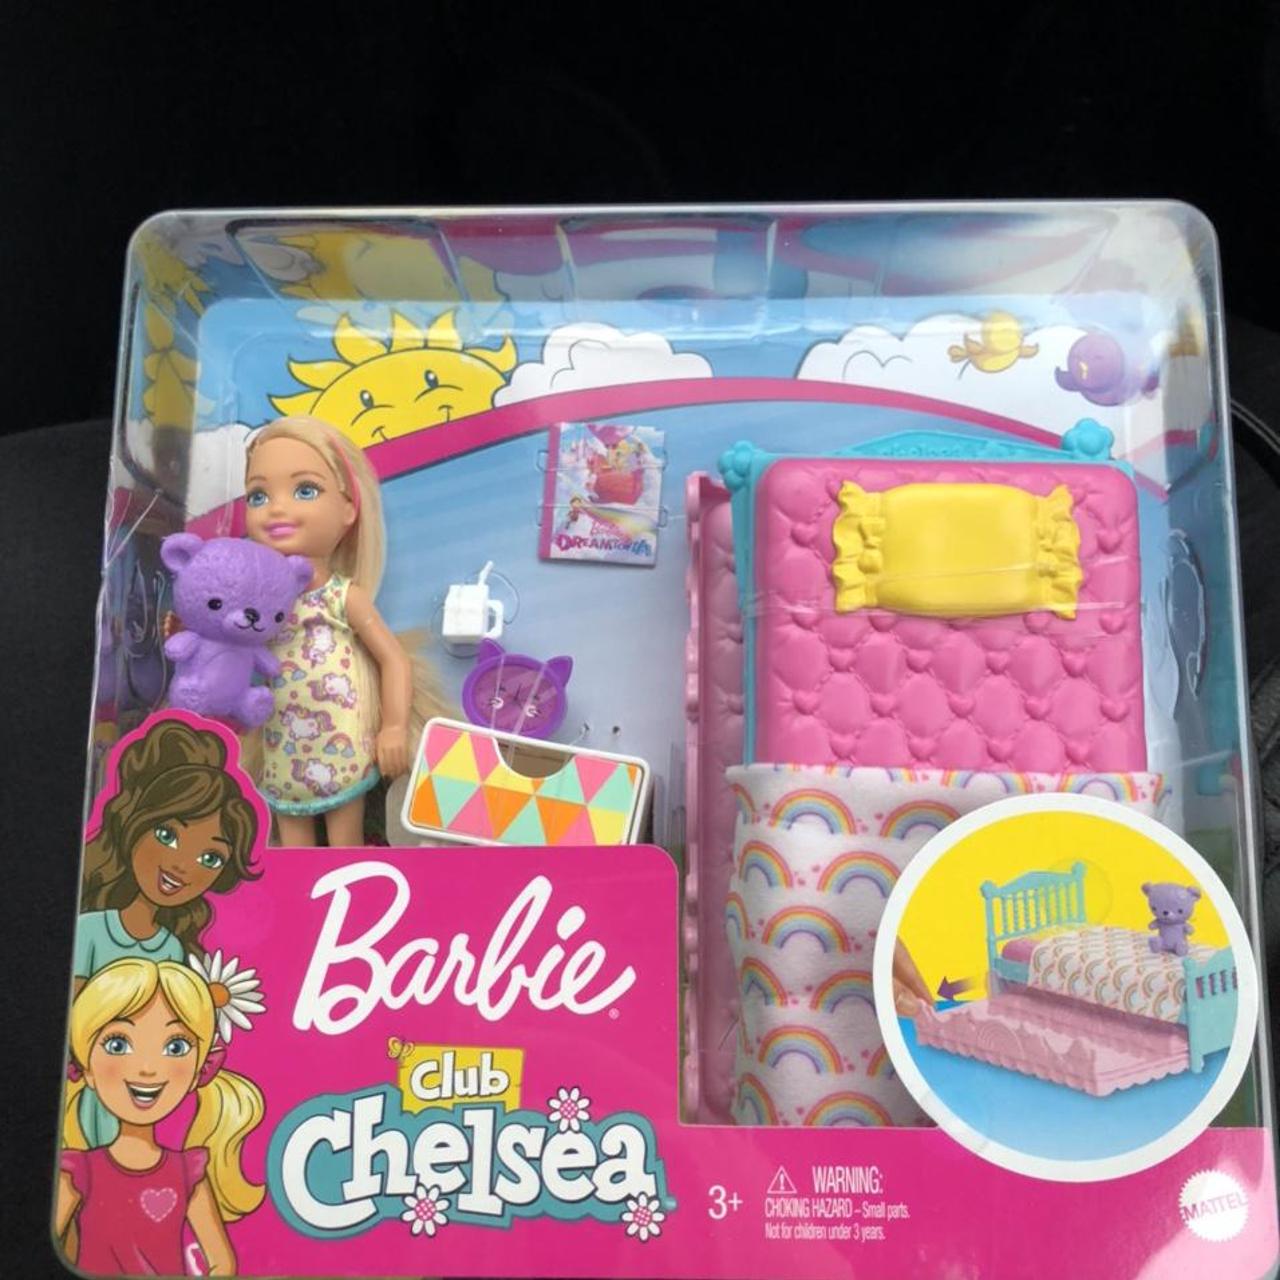 Barbie Club Chelsea Toy 6 Inch Barbie Doll Amazon... - Depop